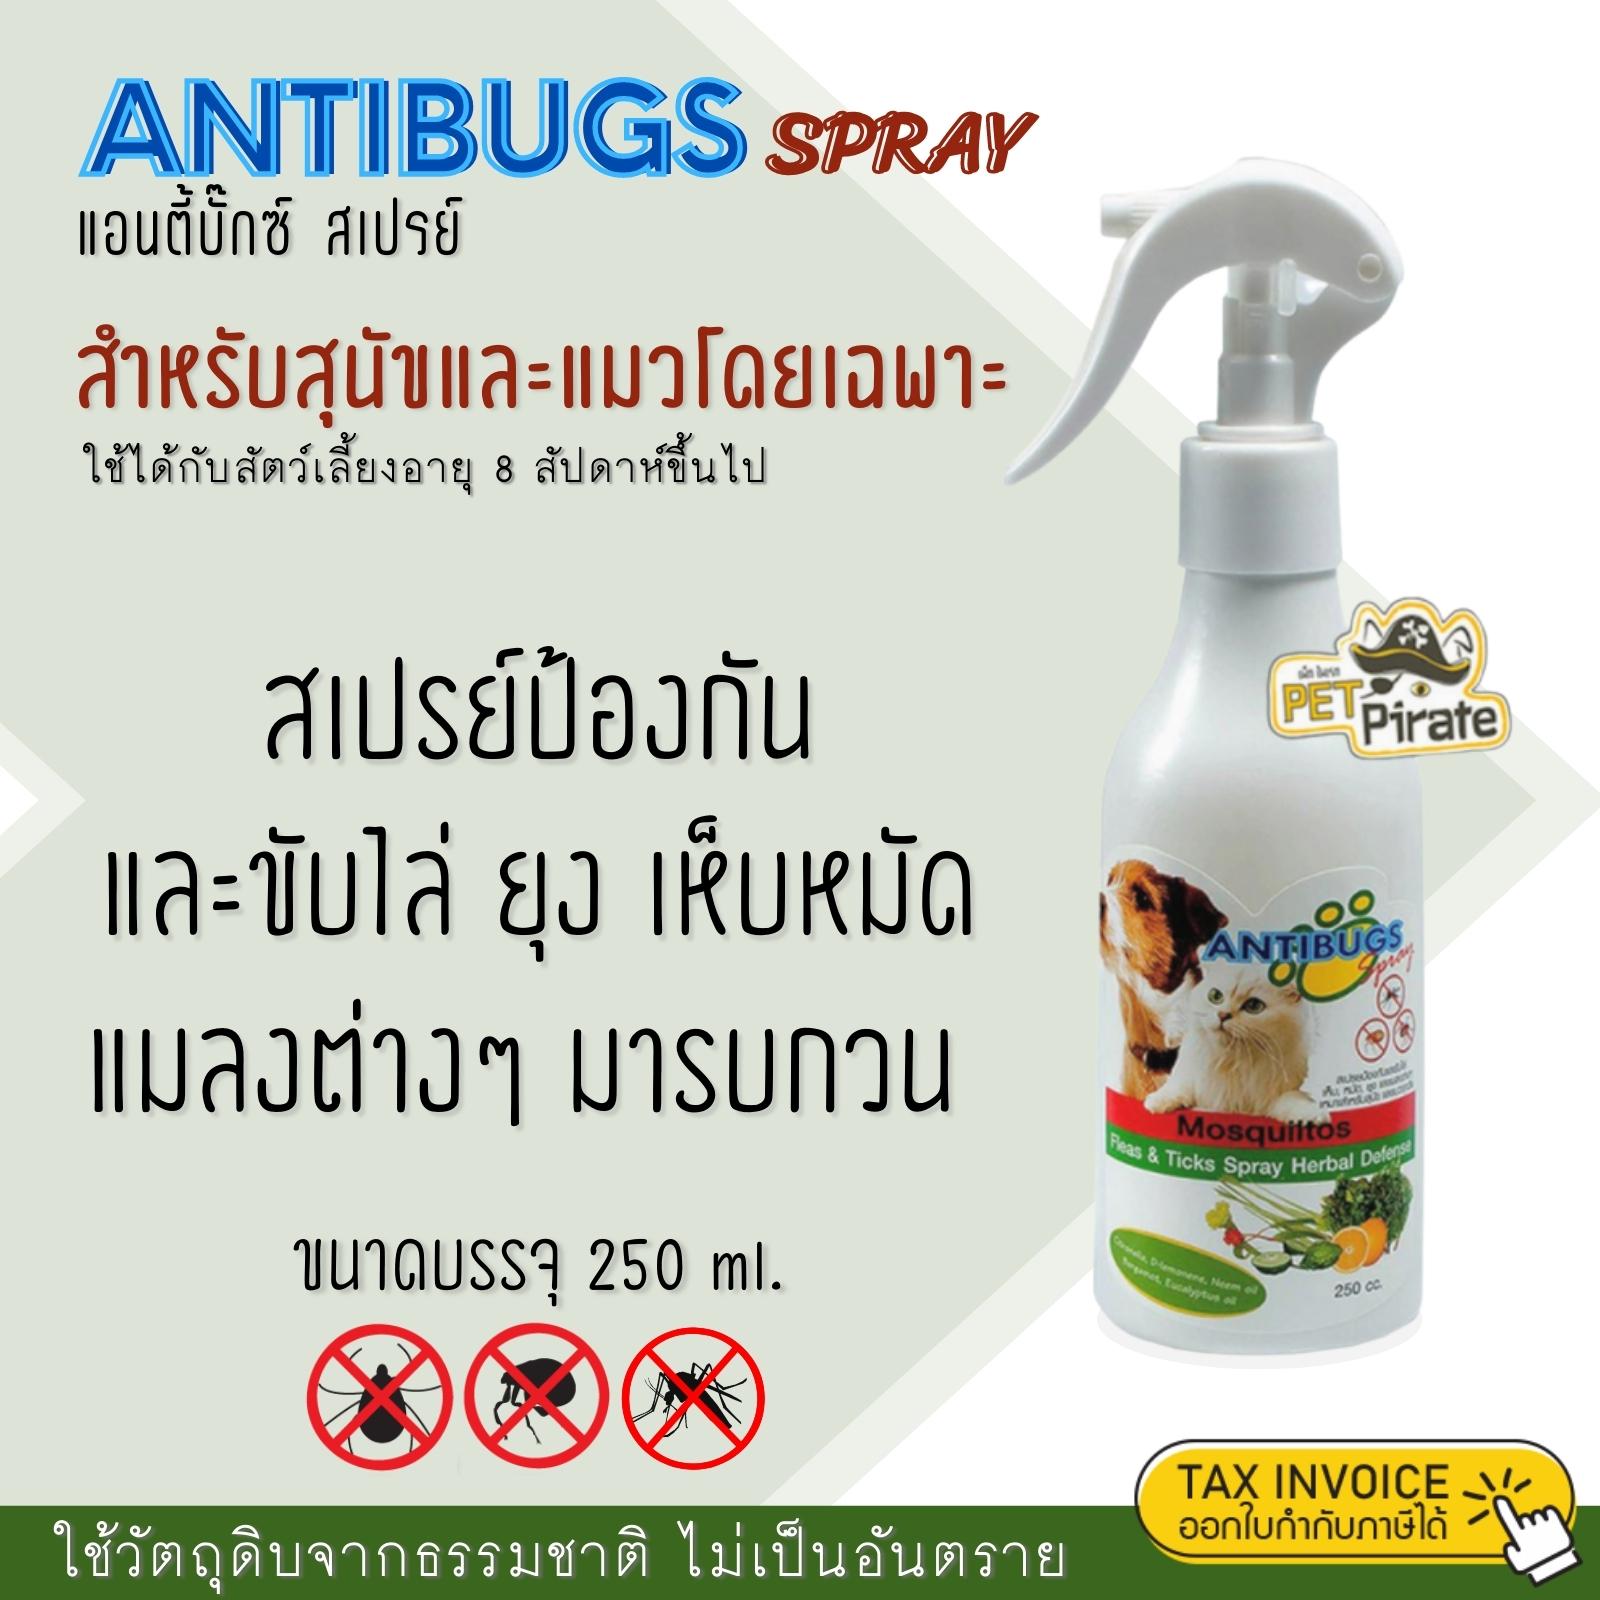 Antibugs Spray แอนตี้บั๊กซ์ สเปรย์ไล่ยุง ป้องกันและขับไล่เห็บหมัด แมลงต่างๆ มารบกวน สำหรับสุนัขและแมวโดยเฉพาะ 250 ml